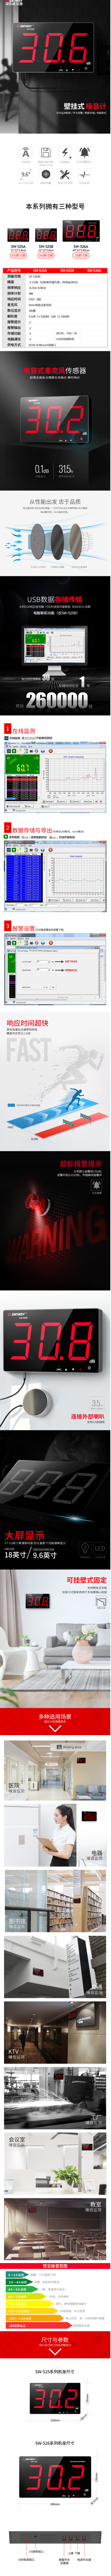 FireShot Capture 045 - 深达威（SNDWAY）大屏噪音计 壁挂式分贝仪 噪音测试仪 SW-525B（9.6英寸屏 自动存储+数据传输）【图片 价格 品牌 报价】-_ - item.jd.com.png